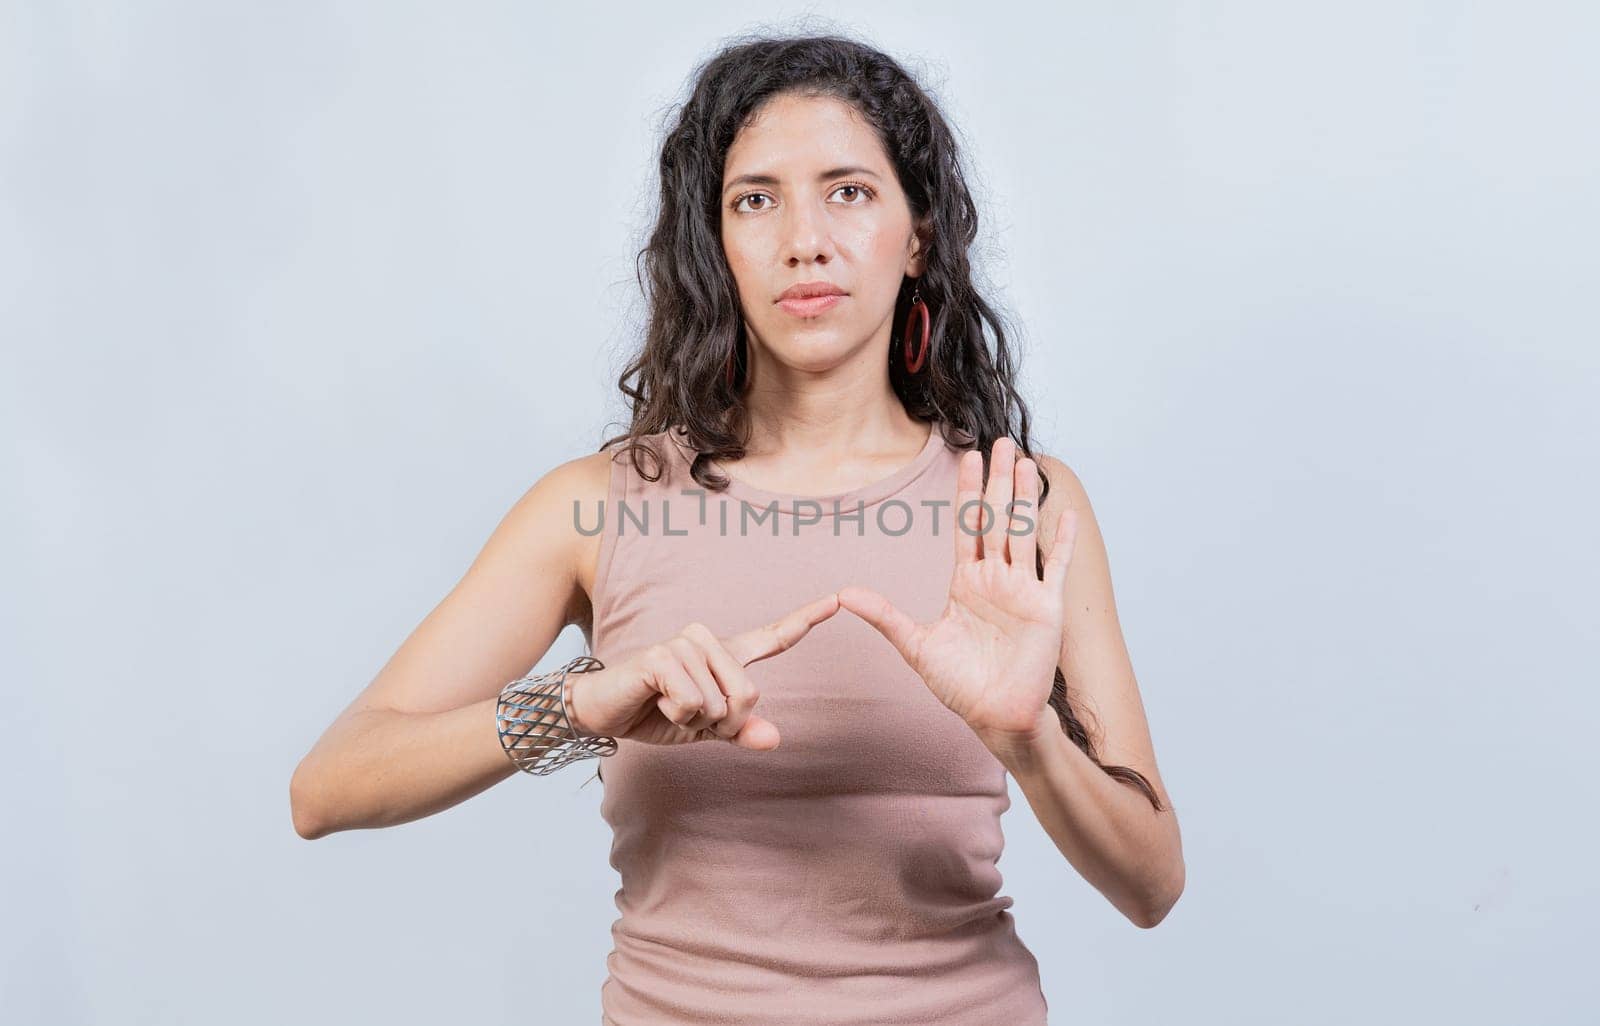 Lating girl gesturing in sign language isolated. Young woman gesturing in sign language, People speaking in sign language isolated